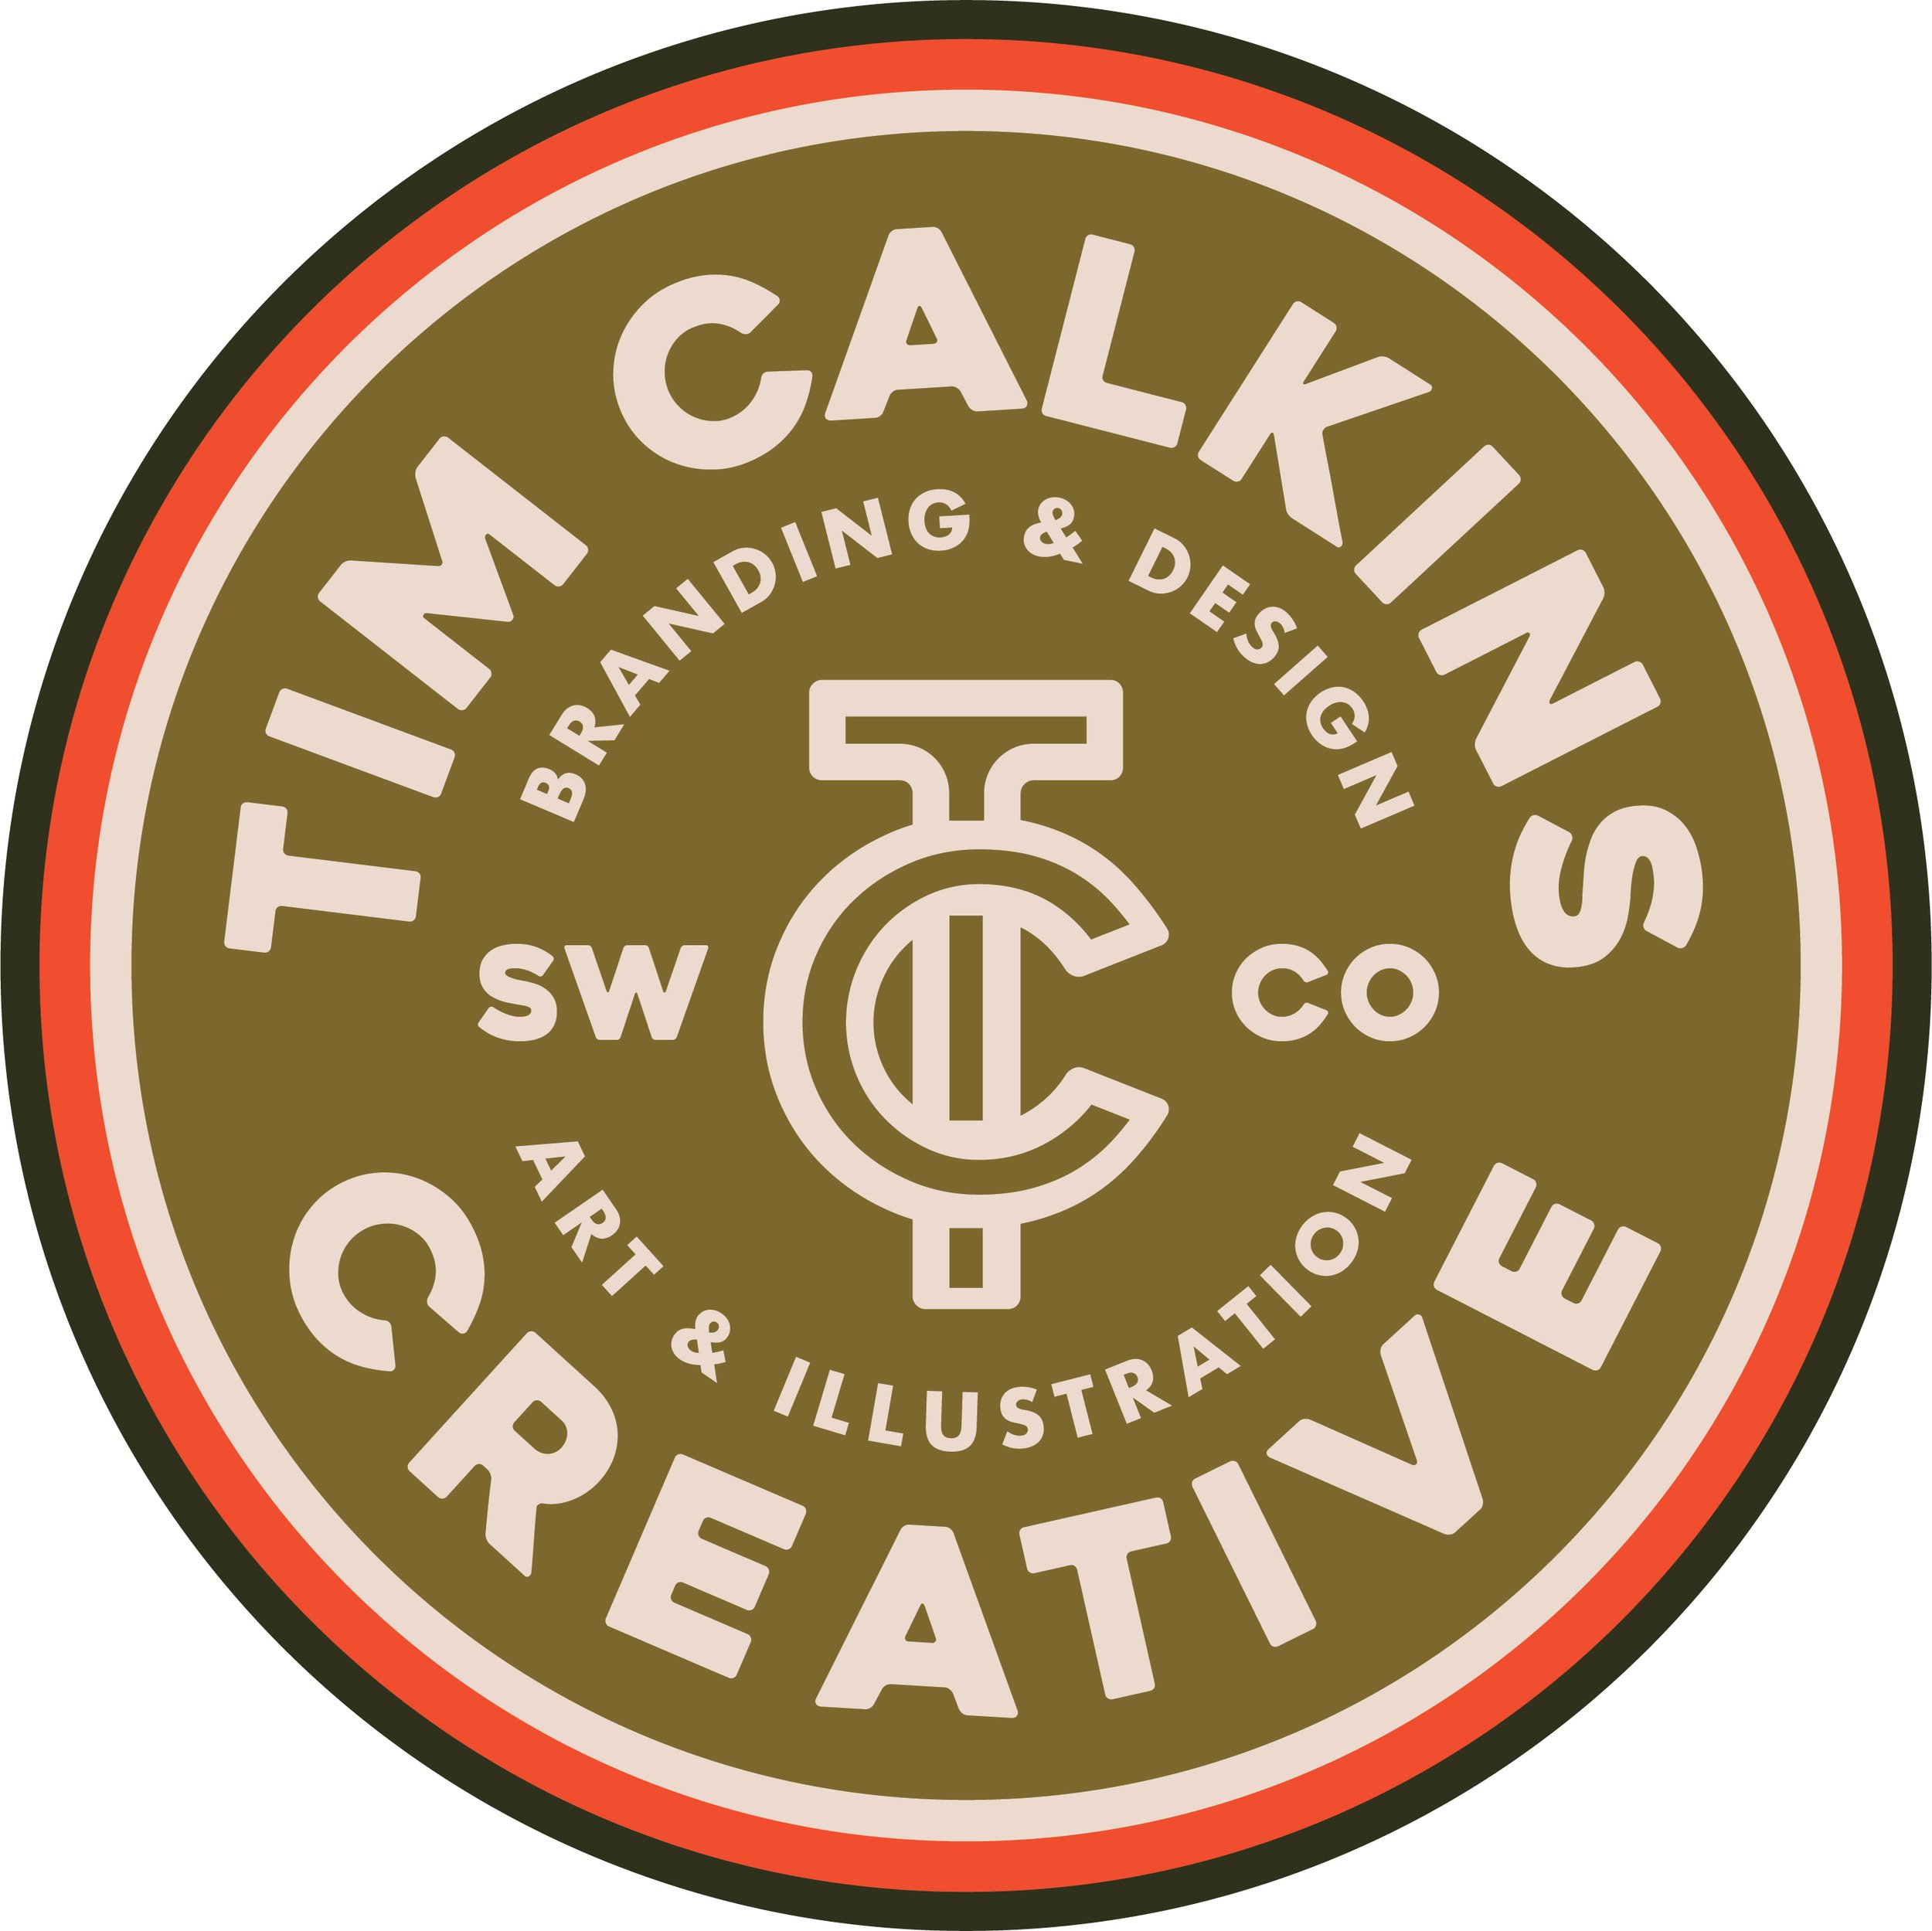 Tim Calkins Creative